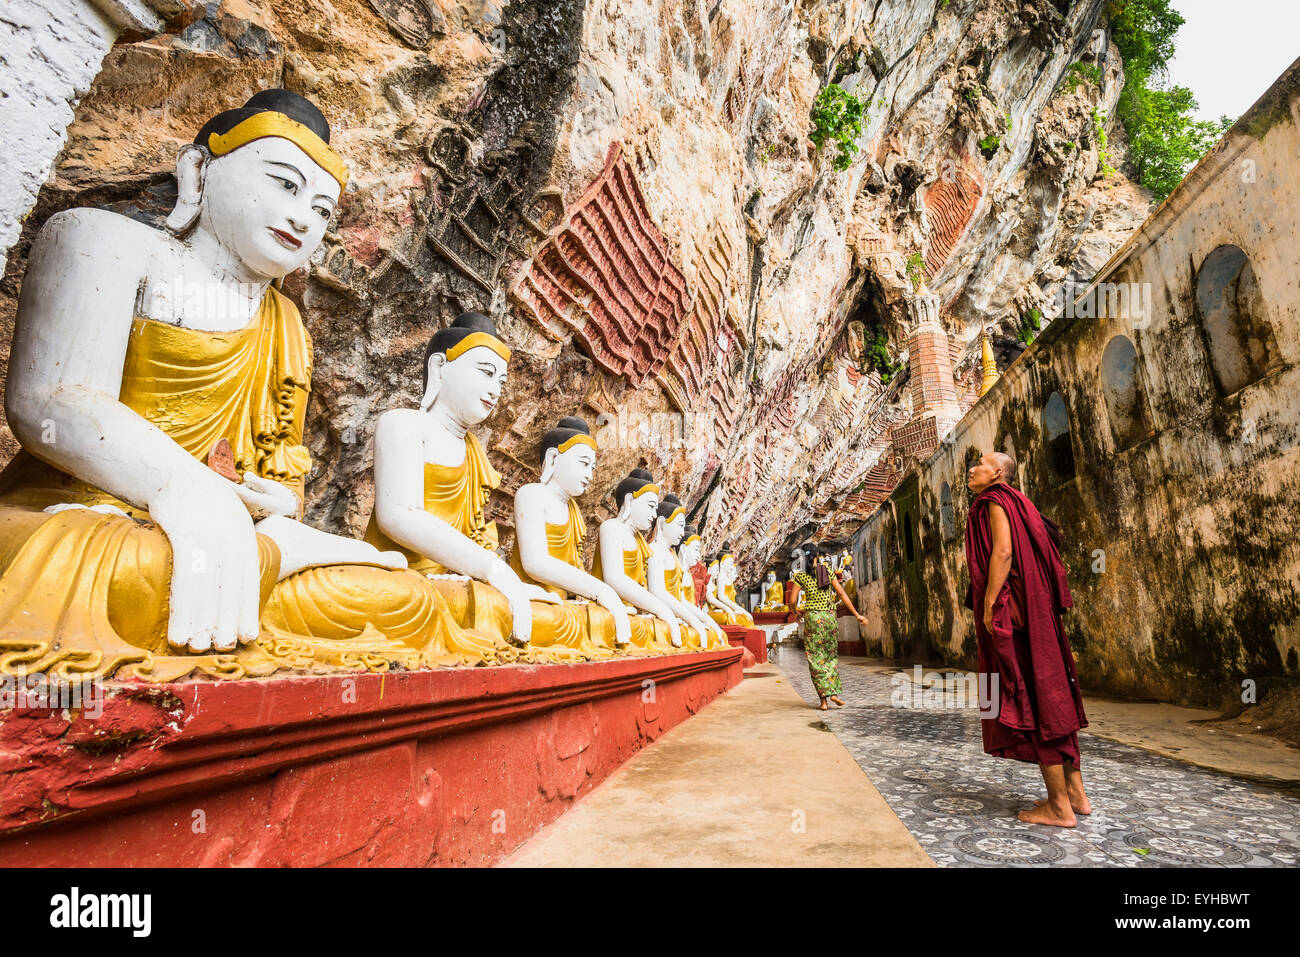 Monk looking at the seated Buddha statues, Kawgun Cave, Hpa-an, Karen or Kayin State, Myanmar Stock Photo